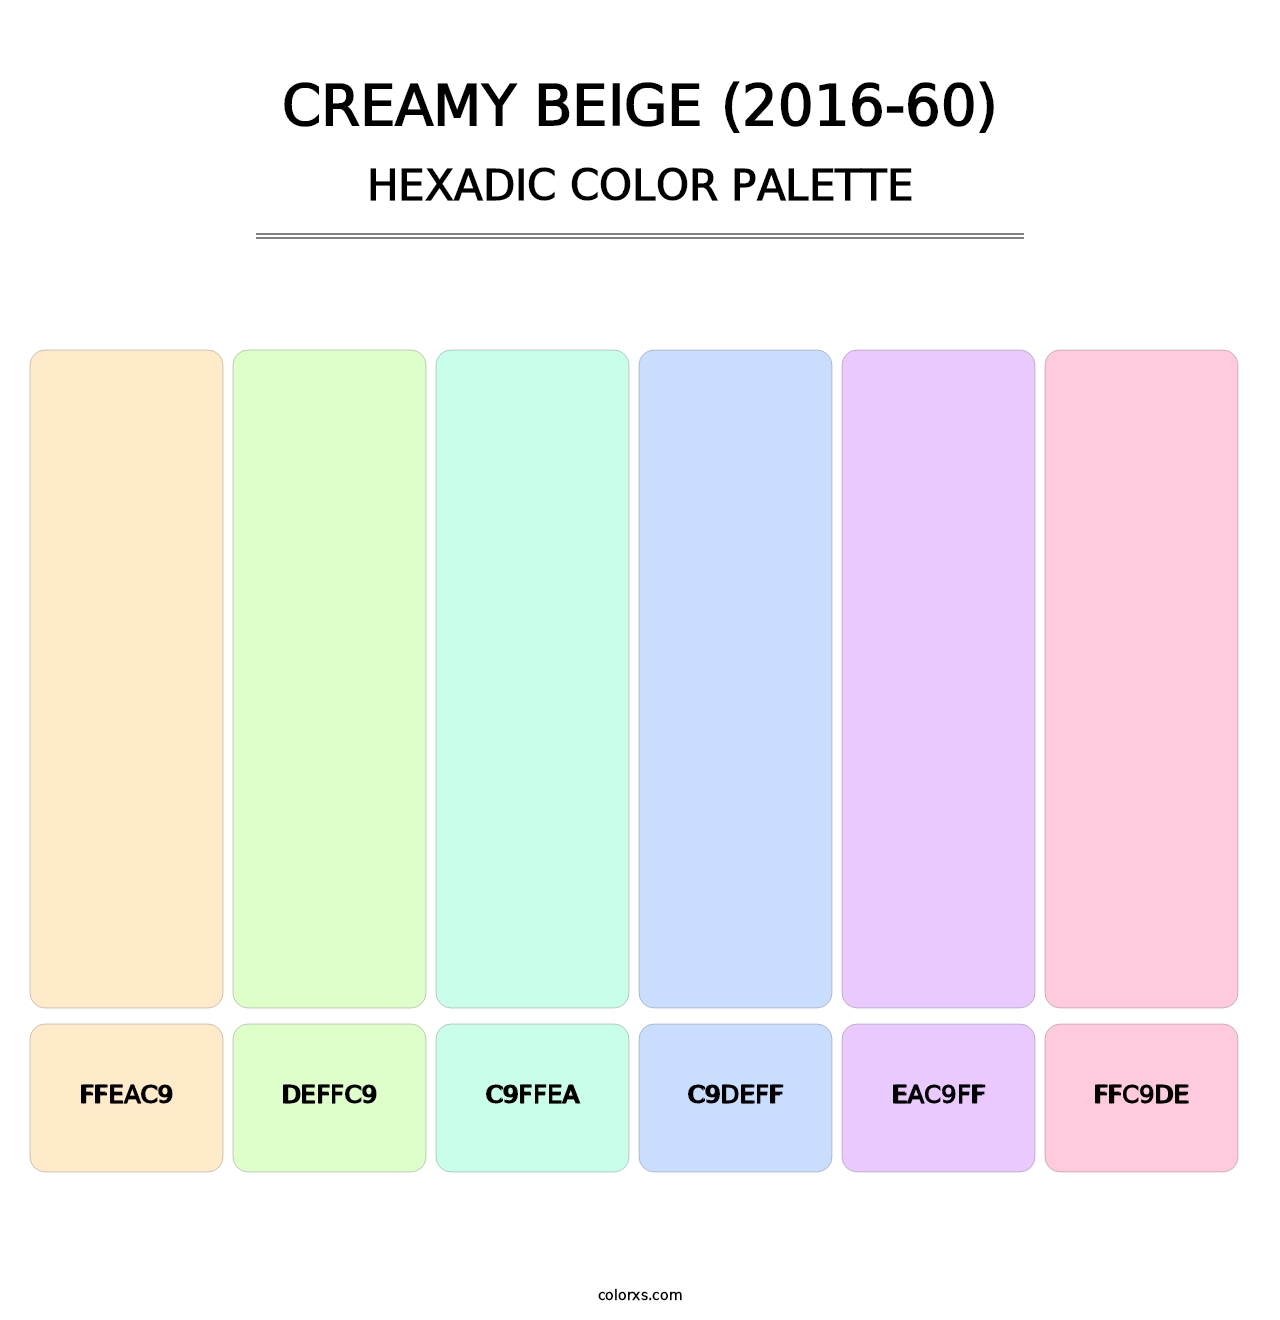 Creamy Beige (2016-60) - Hexadic Color Palette